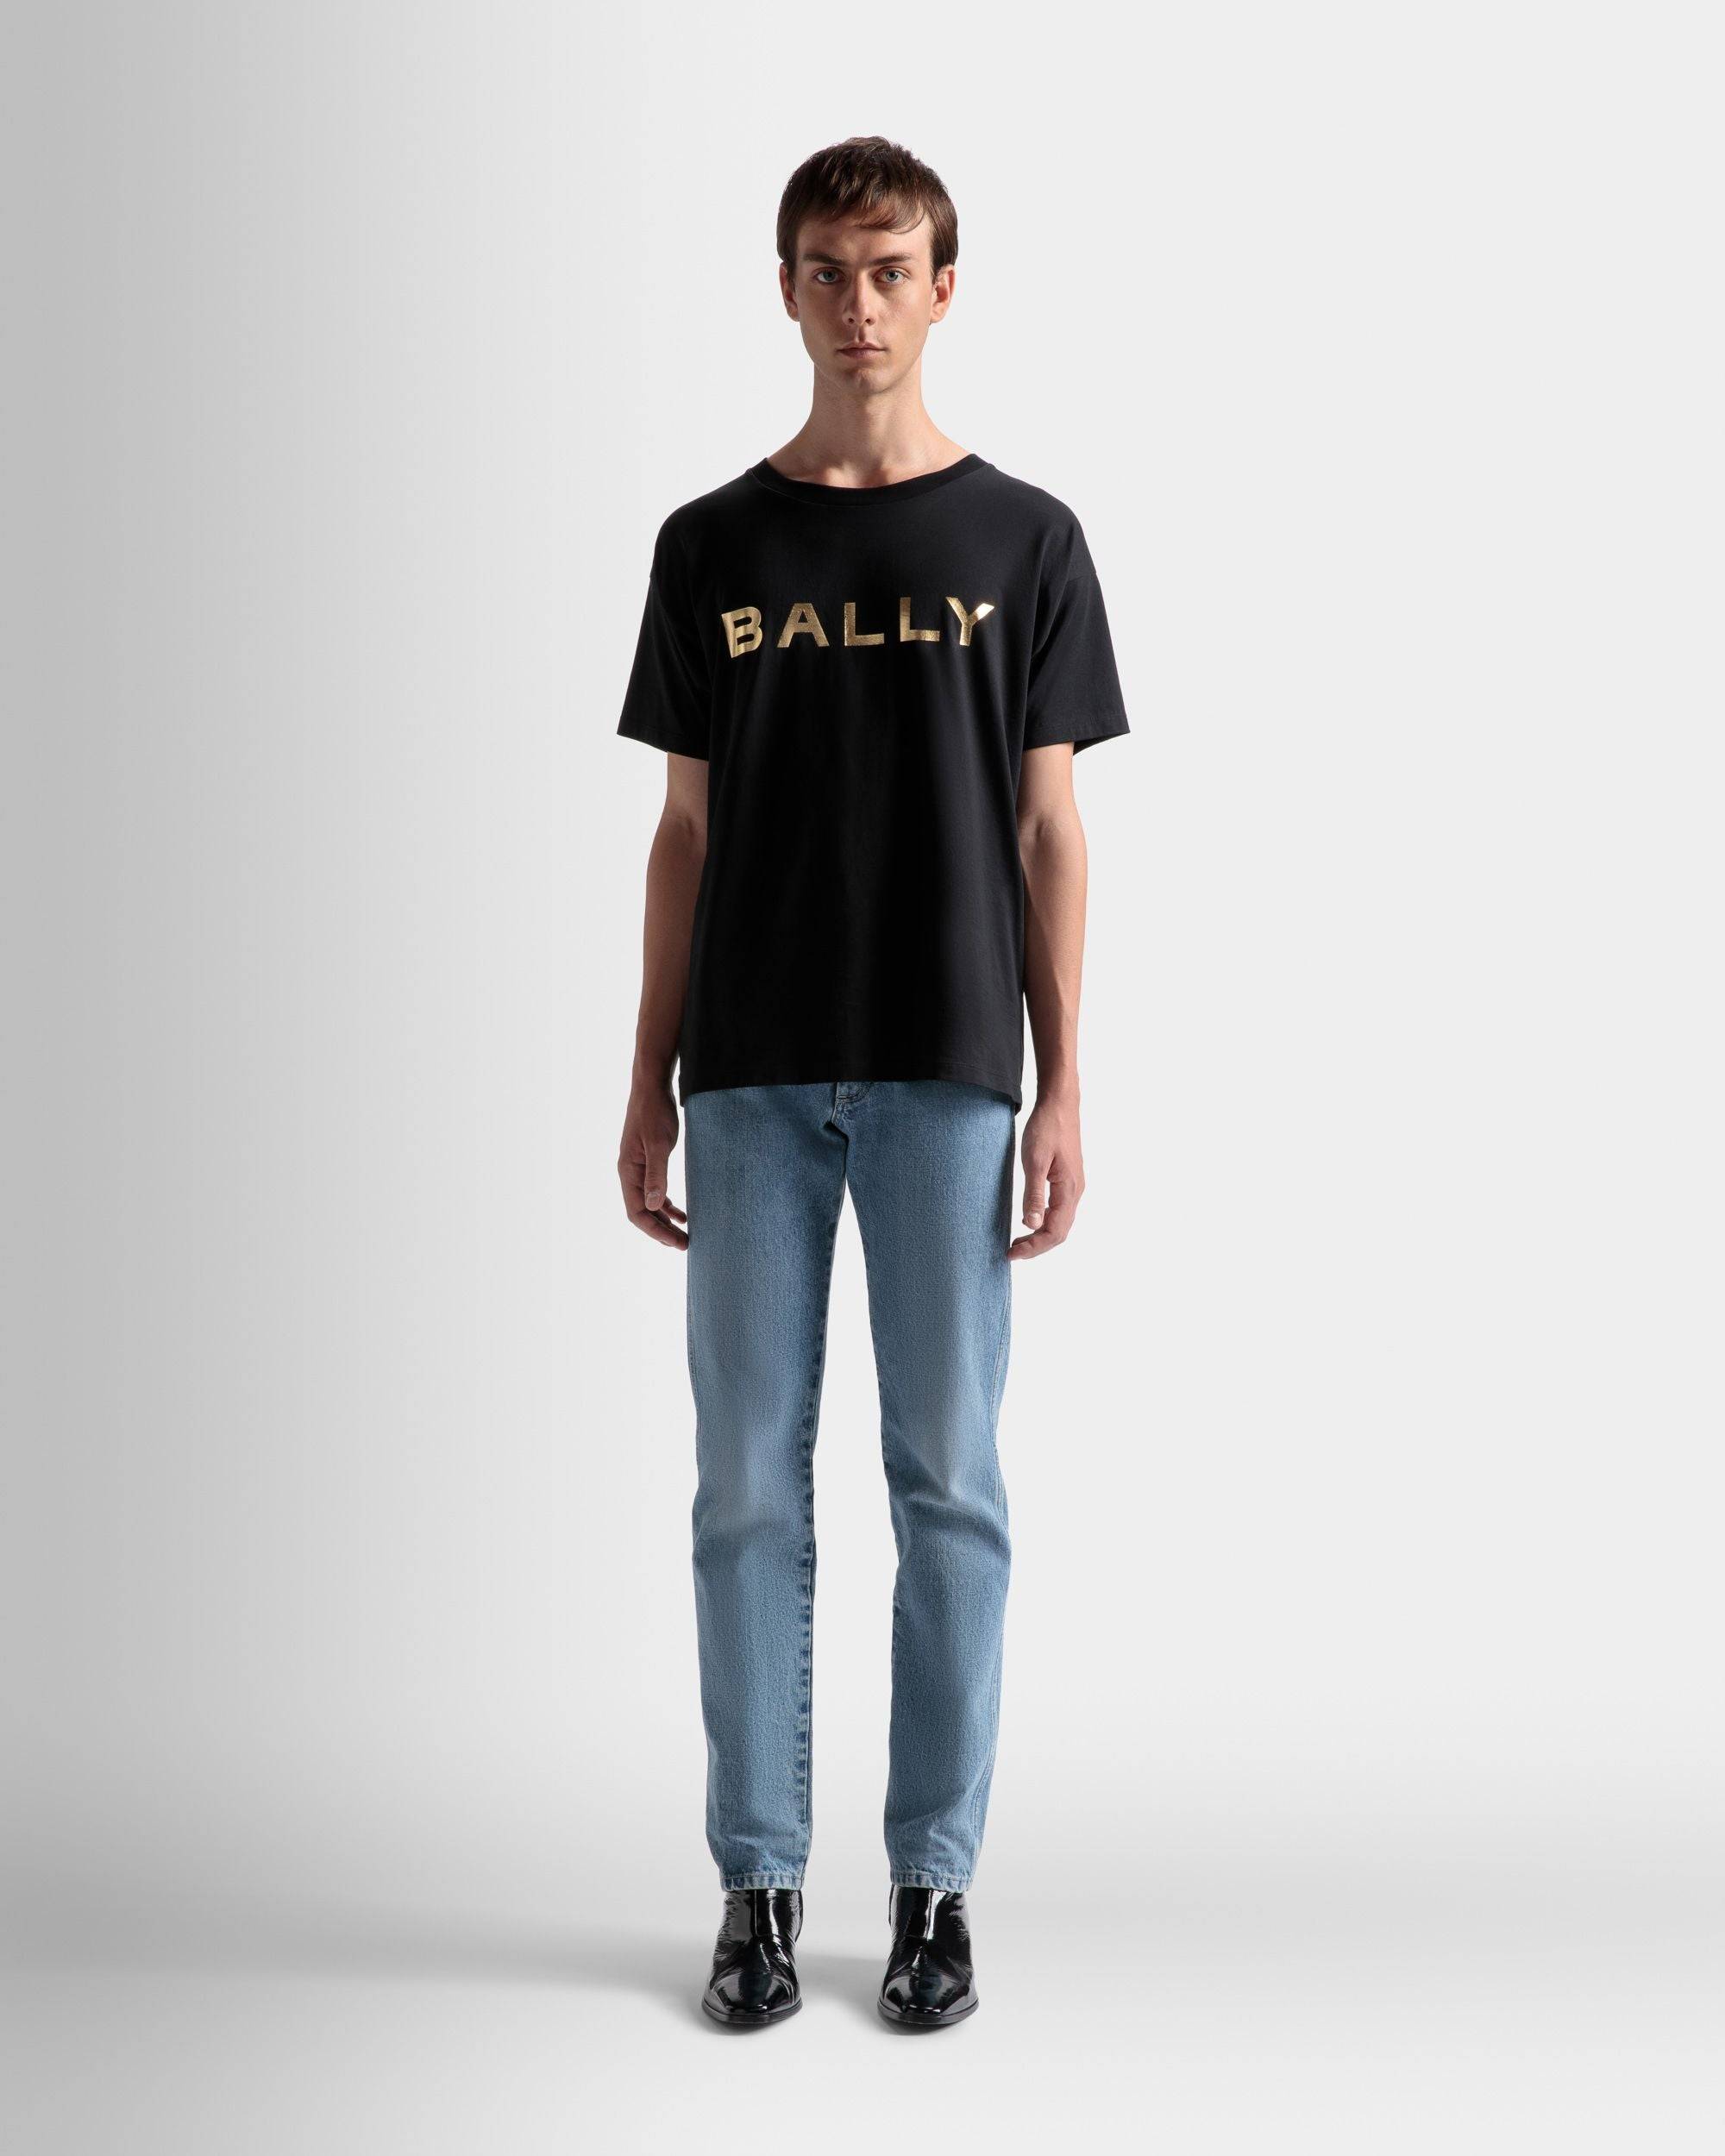 Logo T-Shirt | Men's T-Shirt | Black Cotton | Bally | On Model Front